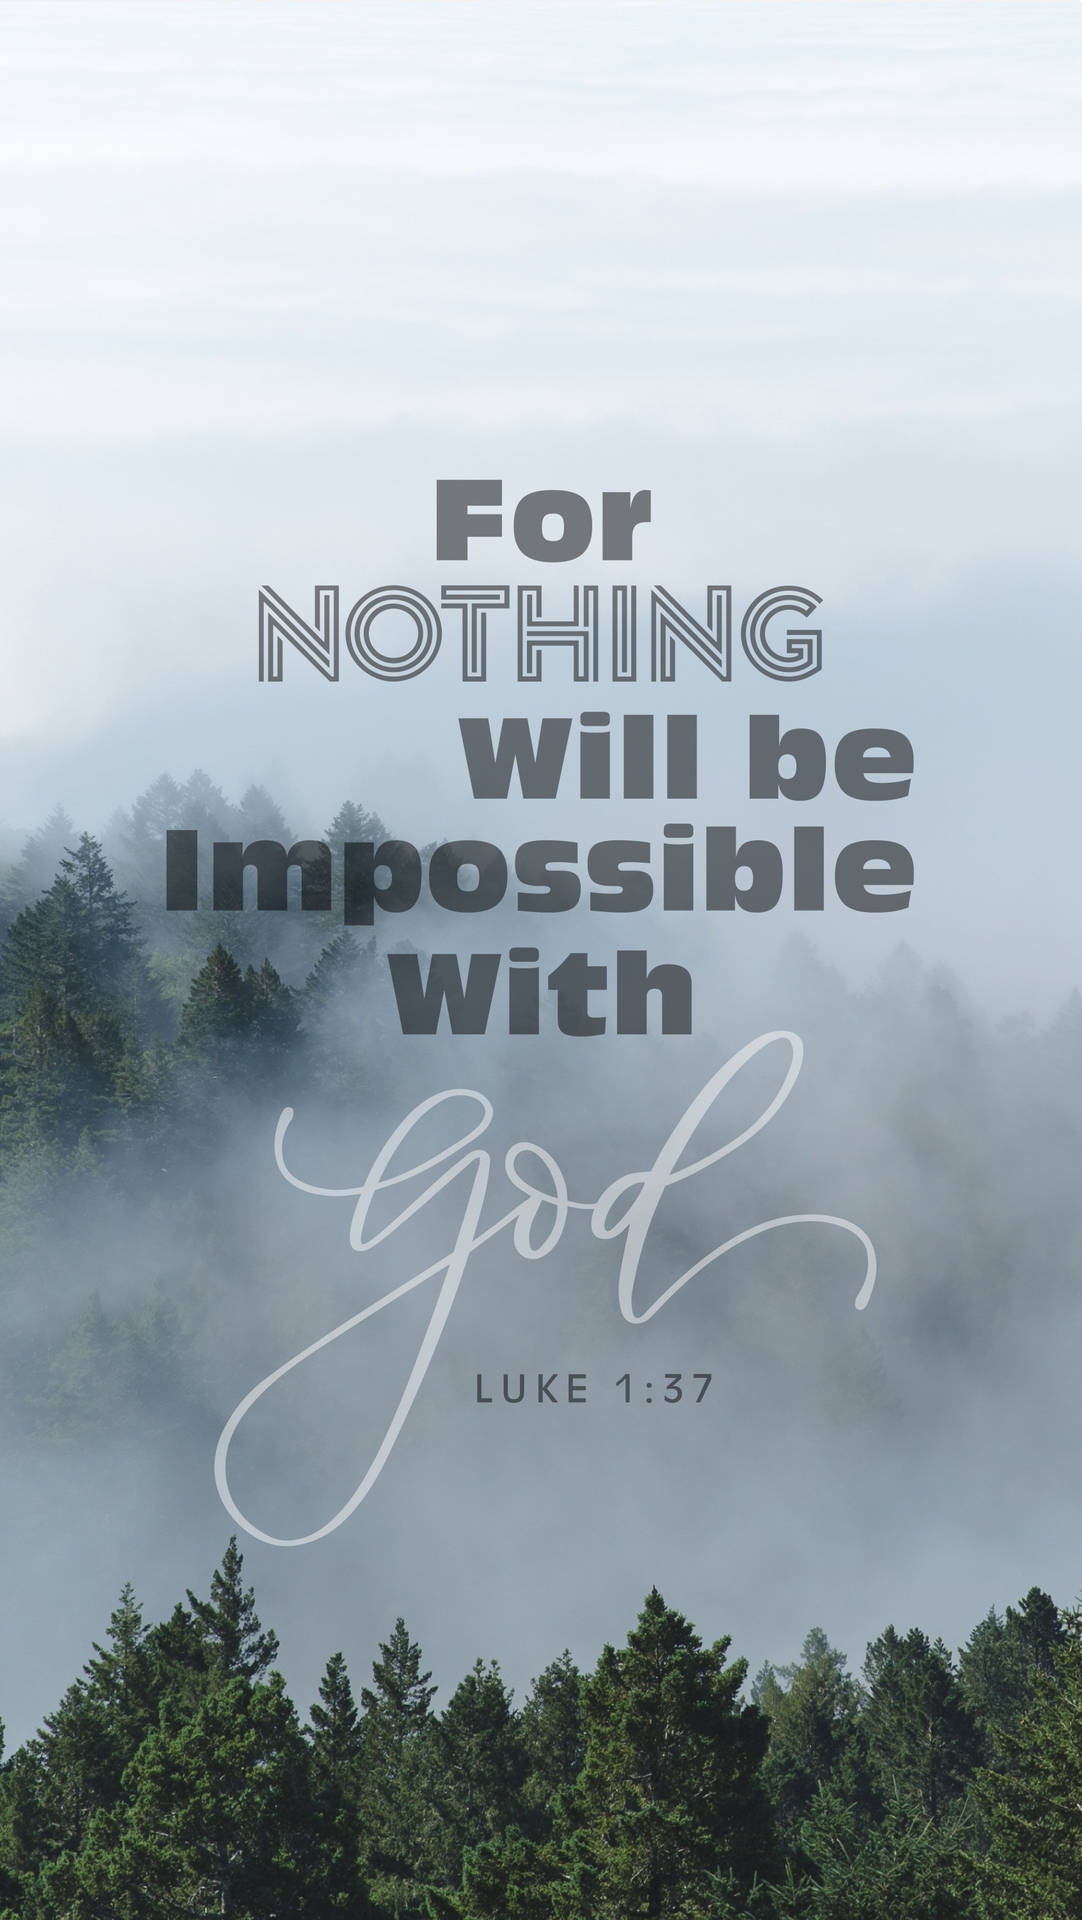 Luke 1:37 Bible Quote Background